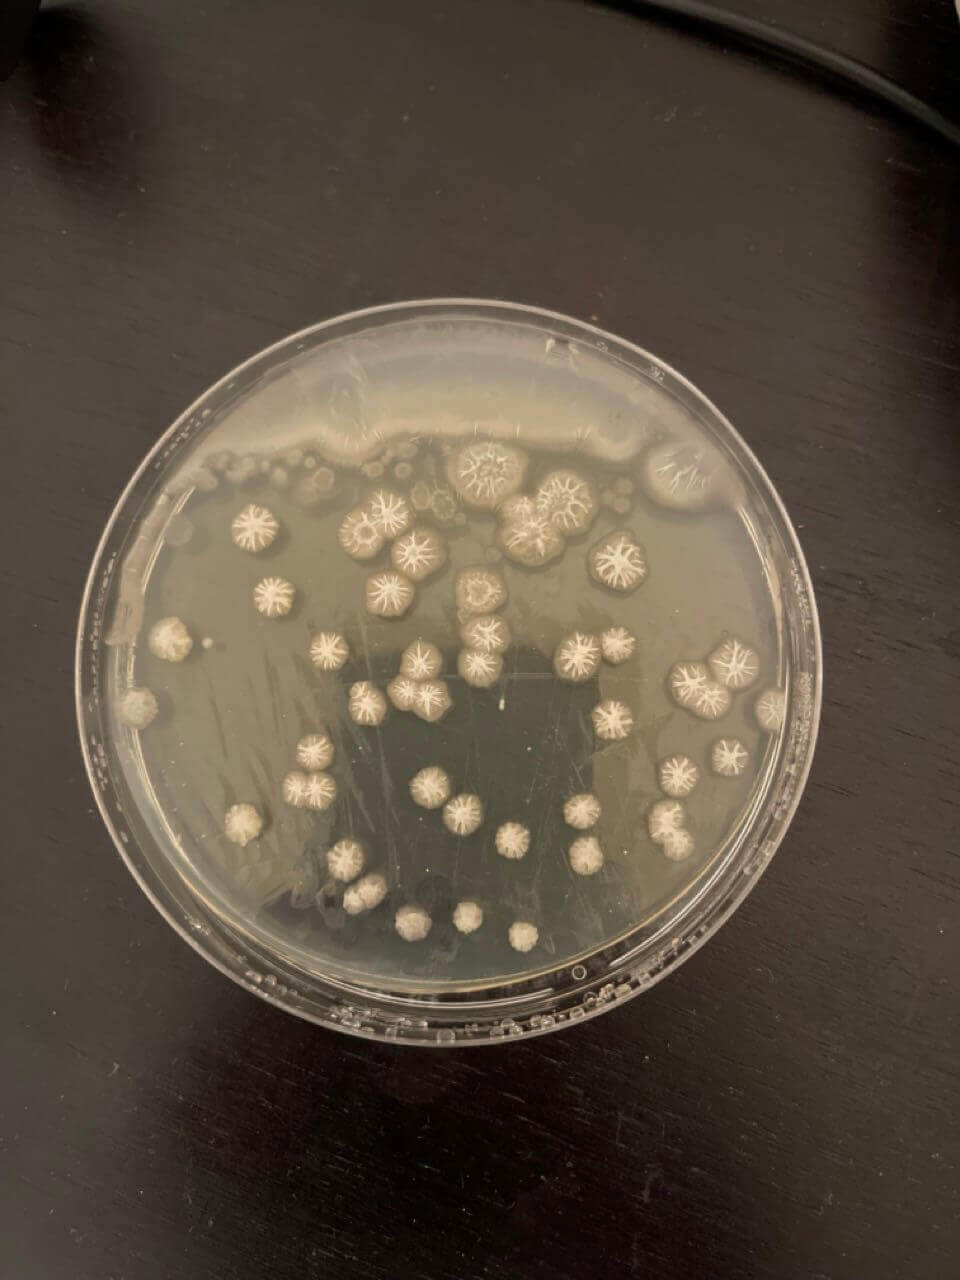 petri dish bacteria after three days not washing hair